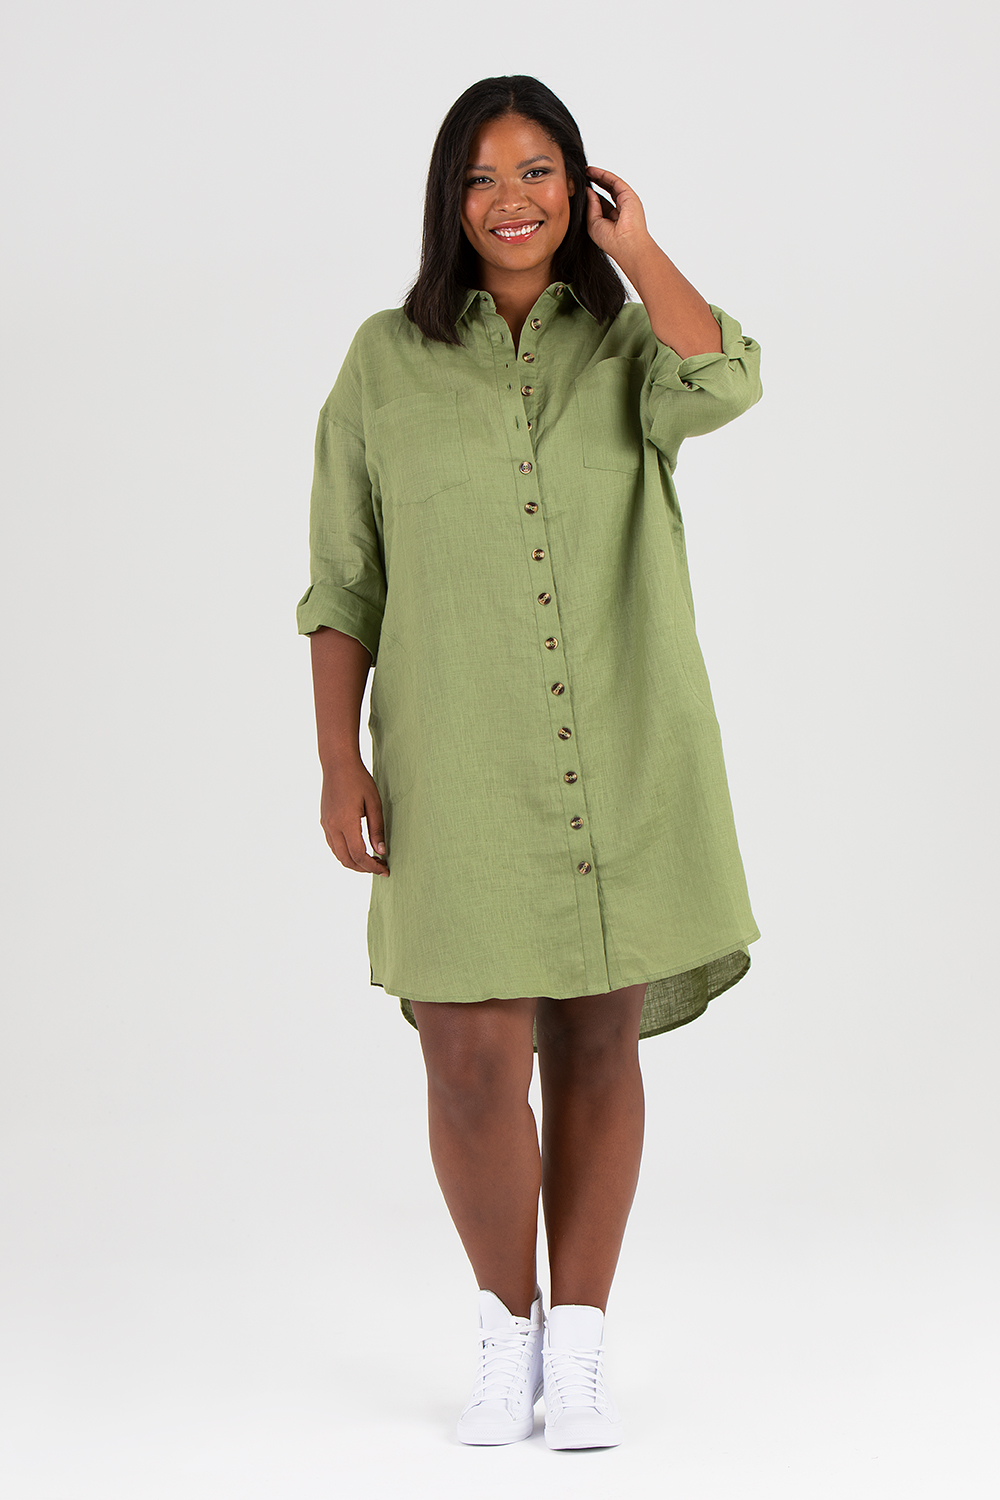 Mynta dress / shirt green